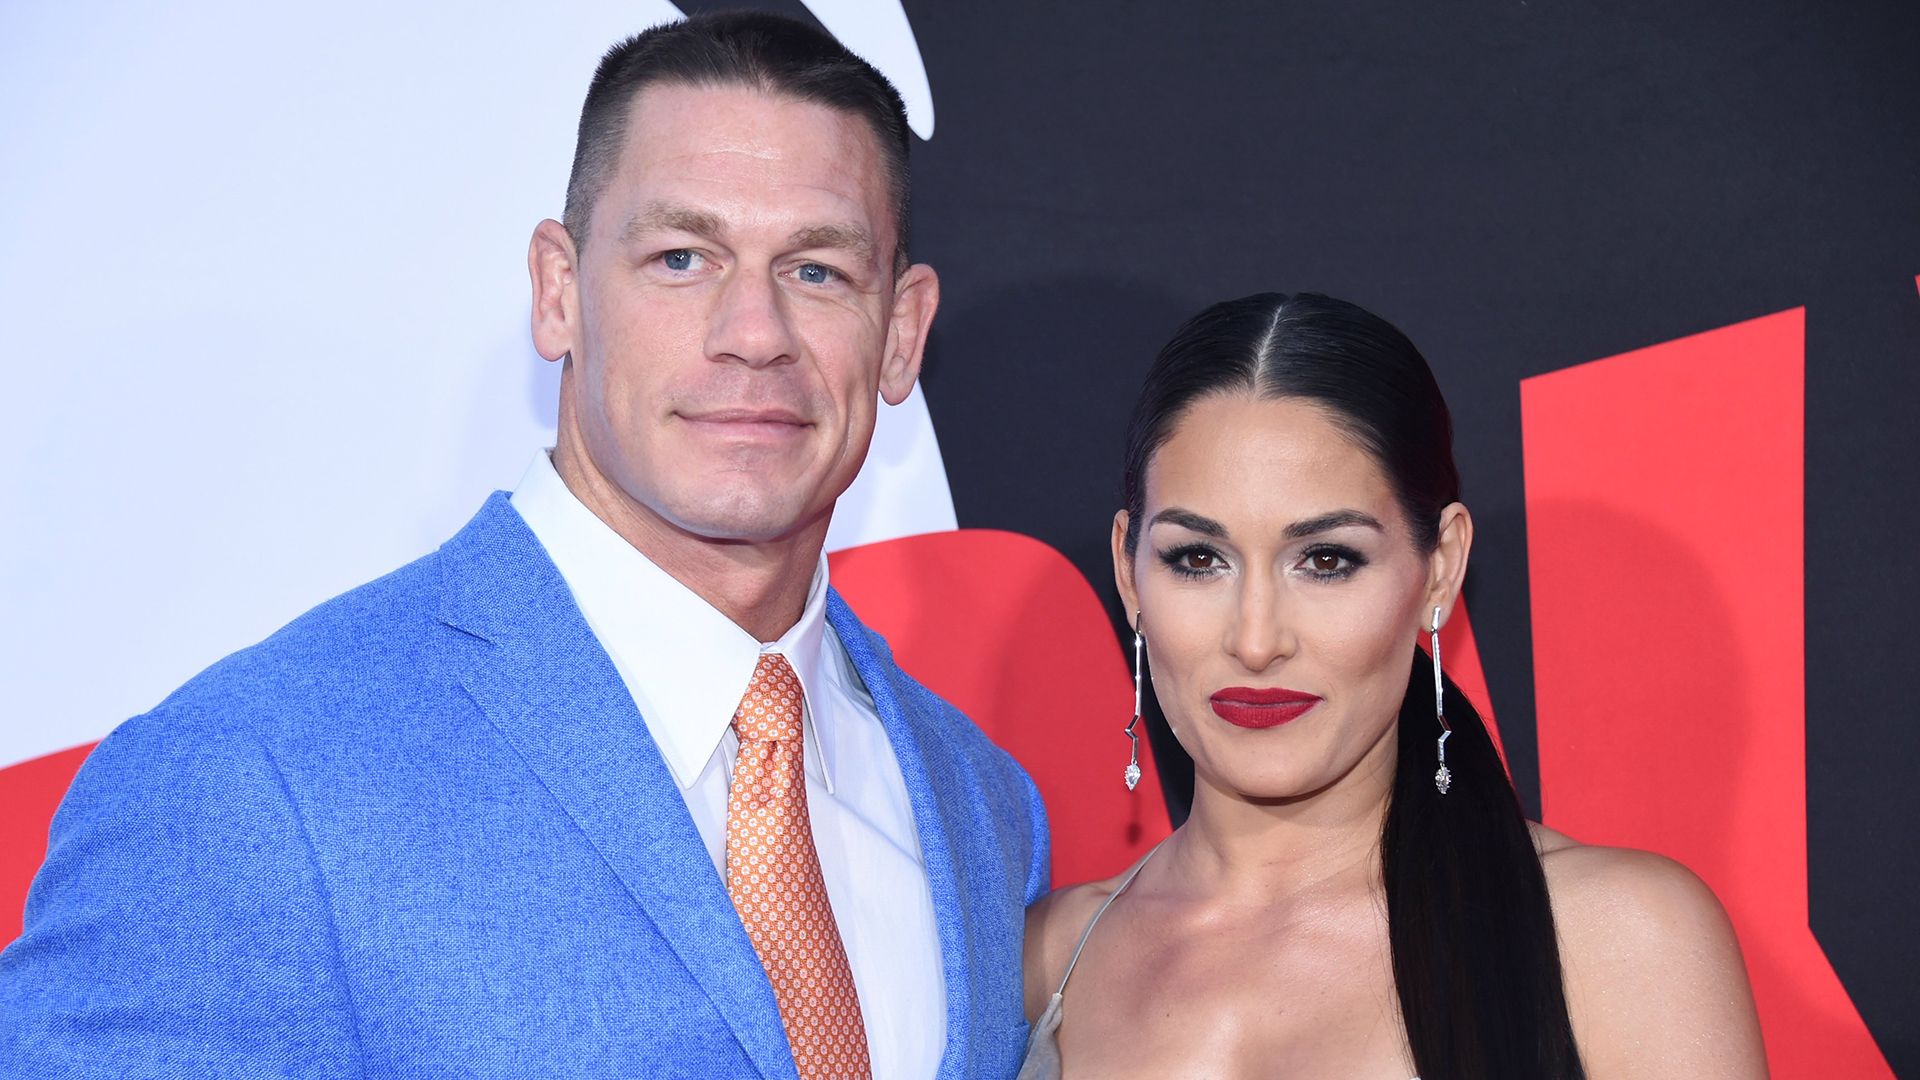 John Cena opens up about Nikki Bella breakup, puts rumors to rest